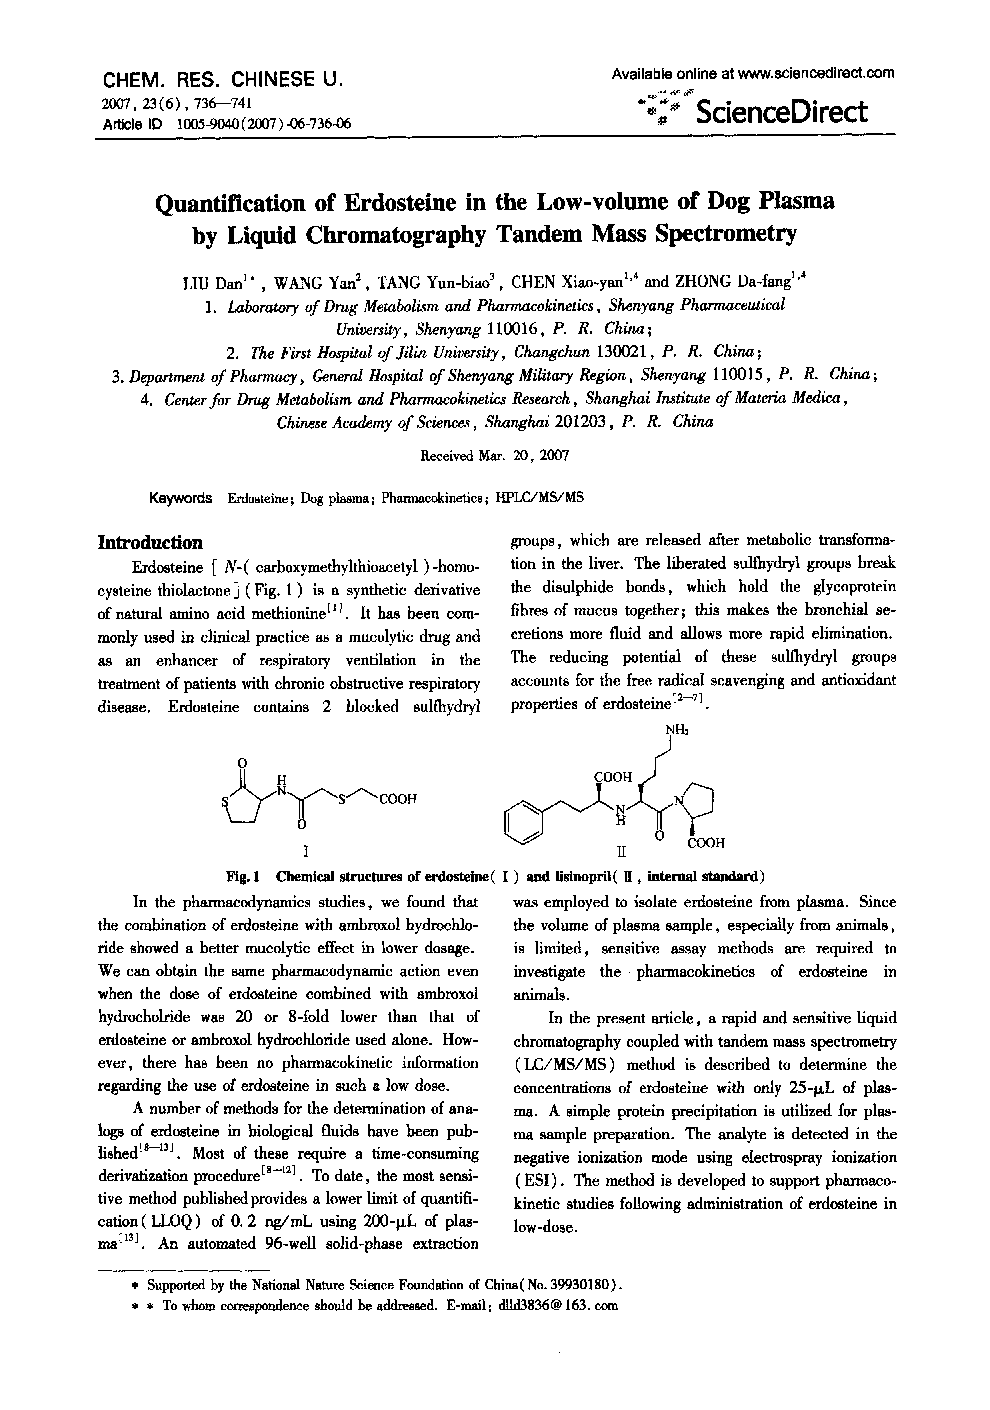 Quantification of Erdosteine in the Low-volume of Dog Plasma by Liquid Chromatography Tandem Mass Spectrometry